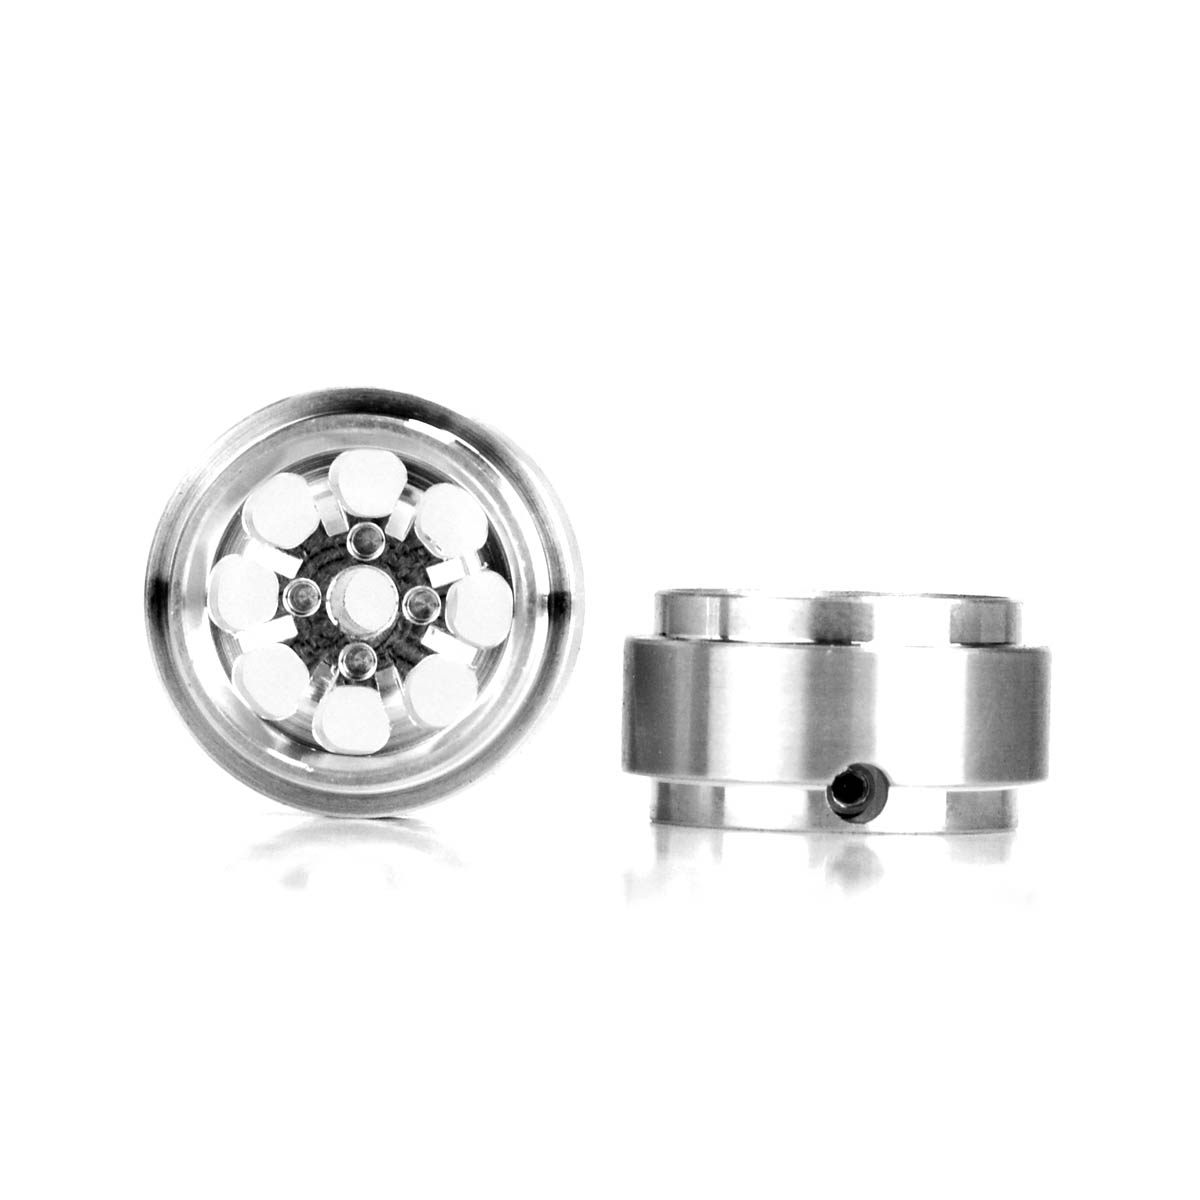 Staffs 92 - Silver Alloy Wheels - Minilite - 15.8 x 8.5mm - pair